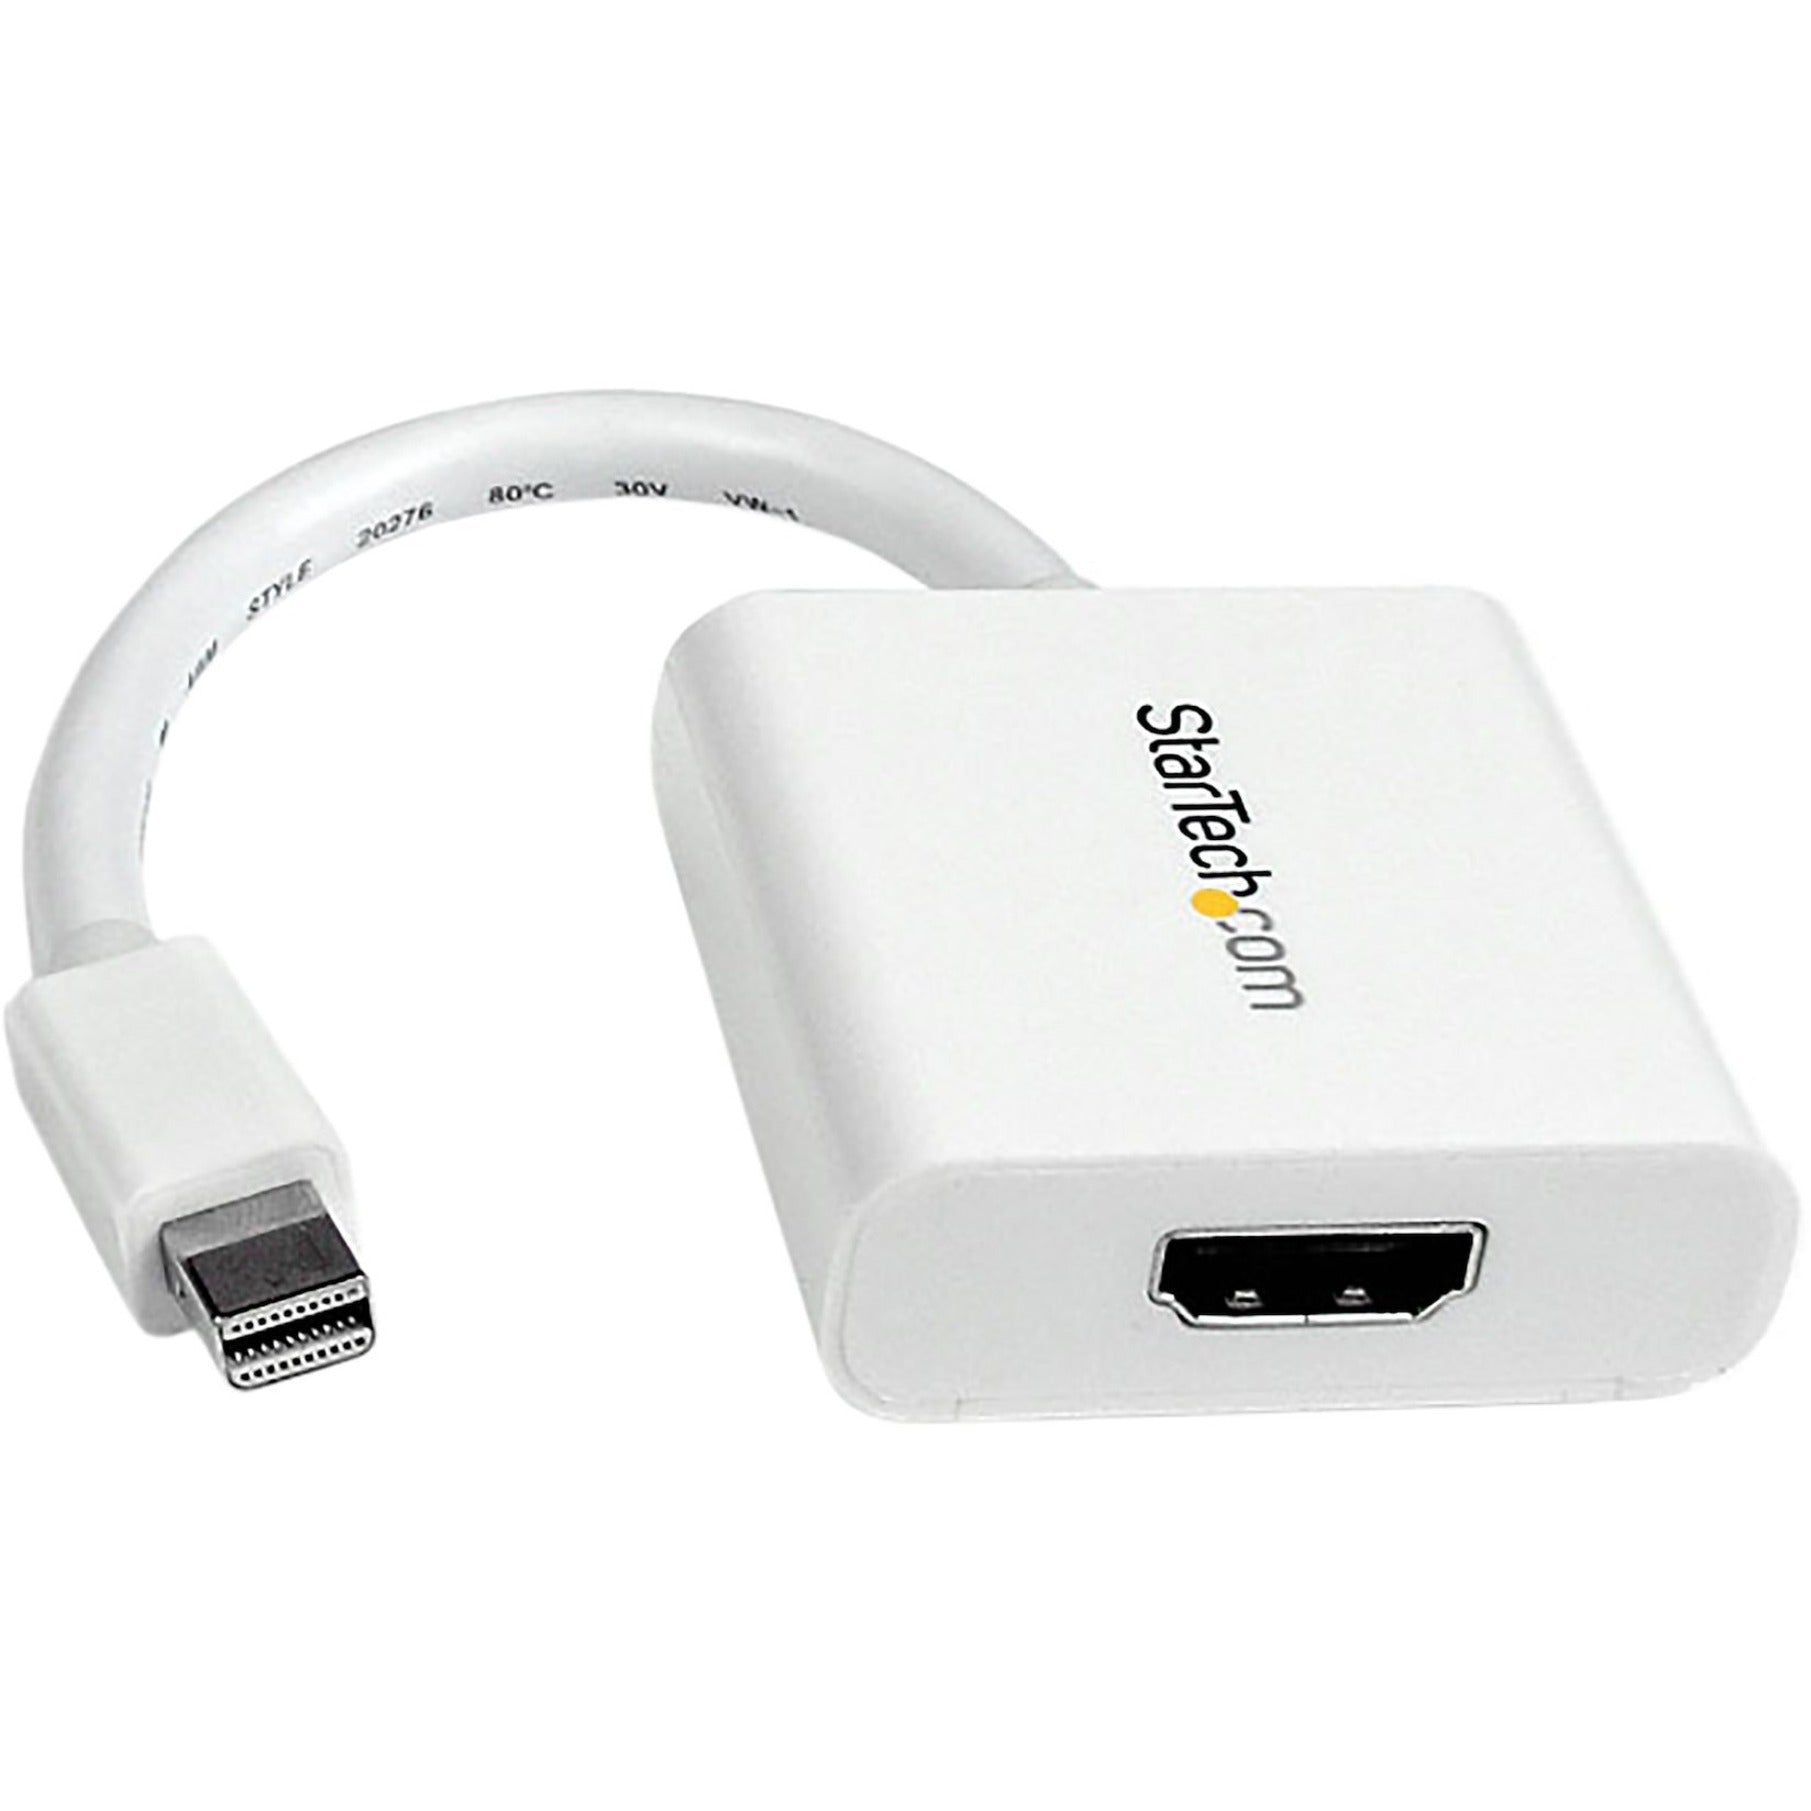 StarTech.com MDP2HDW Mini DisplayPort to HDMI Video Adapter Converter - White, Passive, DPCP, HDCP 1.4